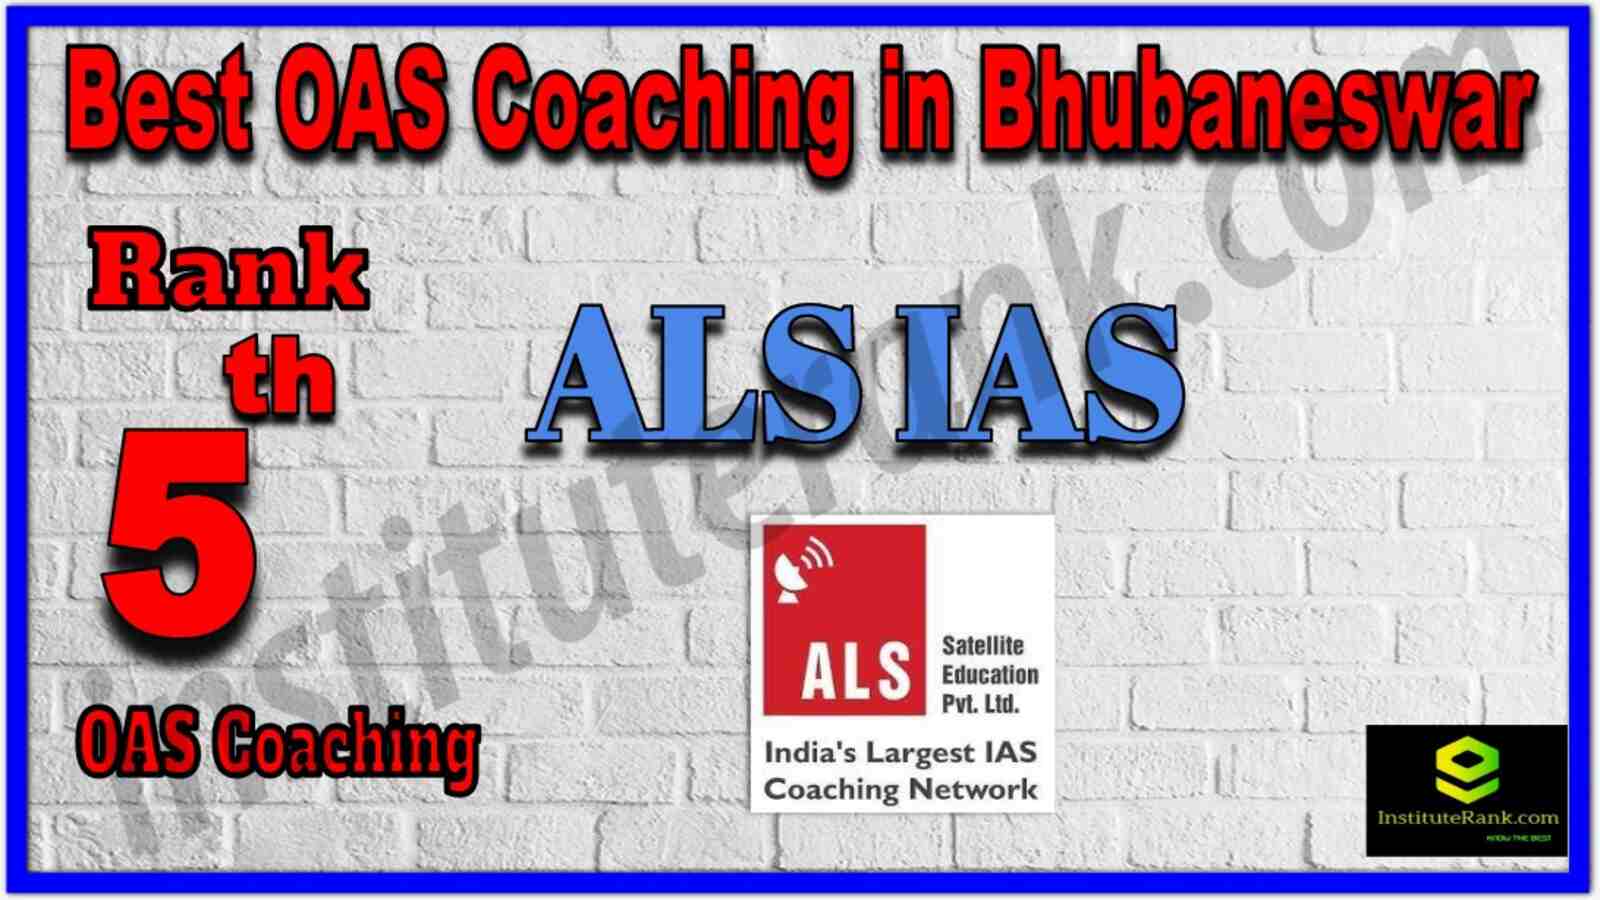 Rank 5 Best OAS Coaching in Bhubaneswar